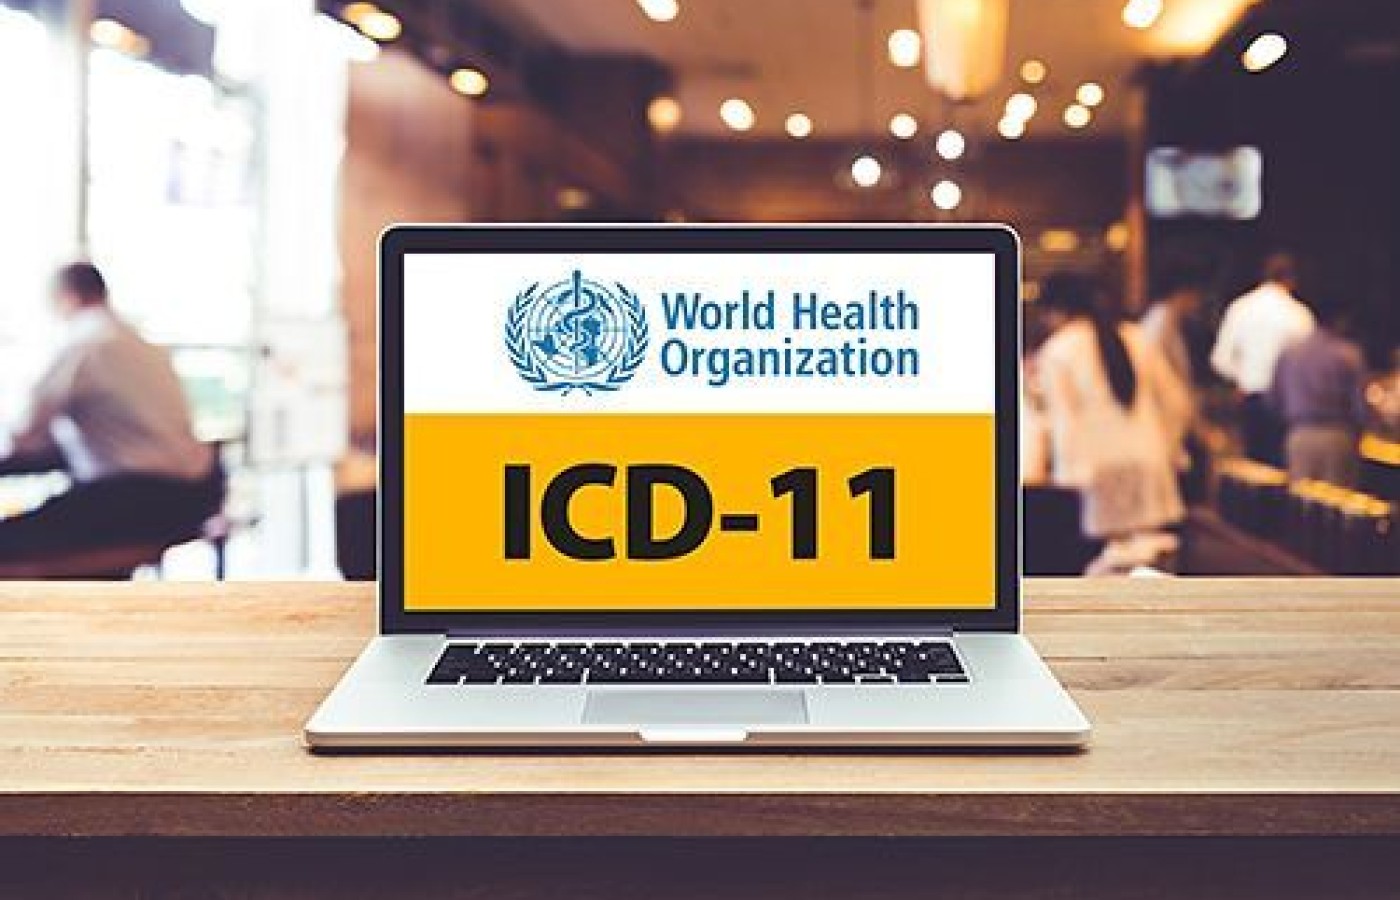 ICD 11